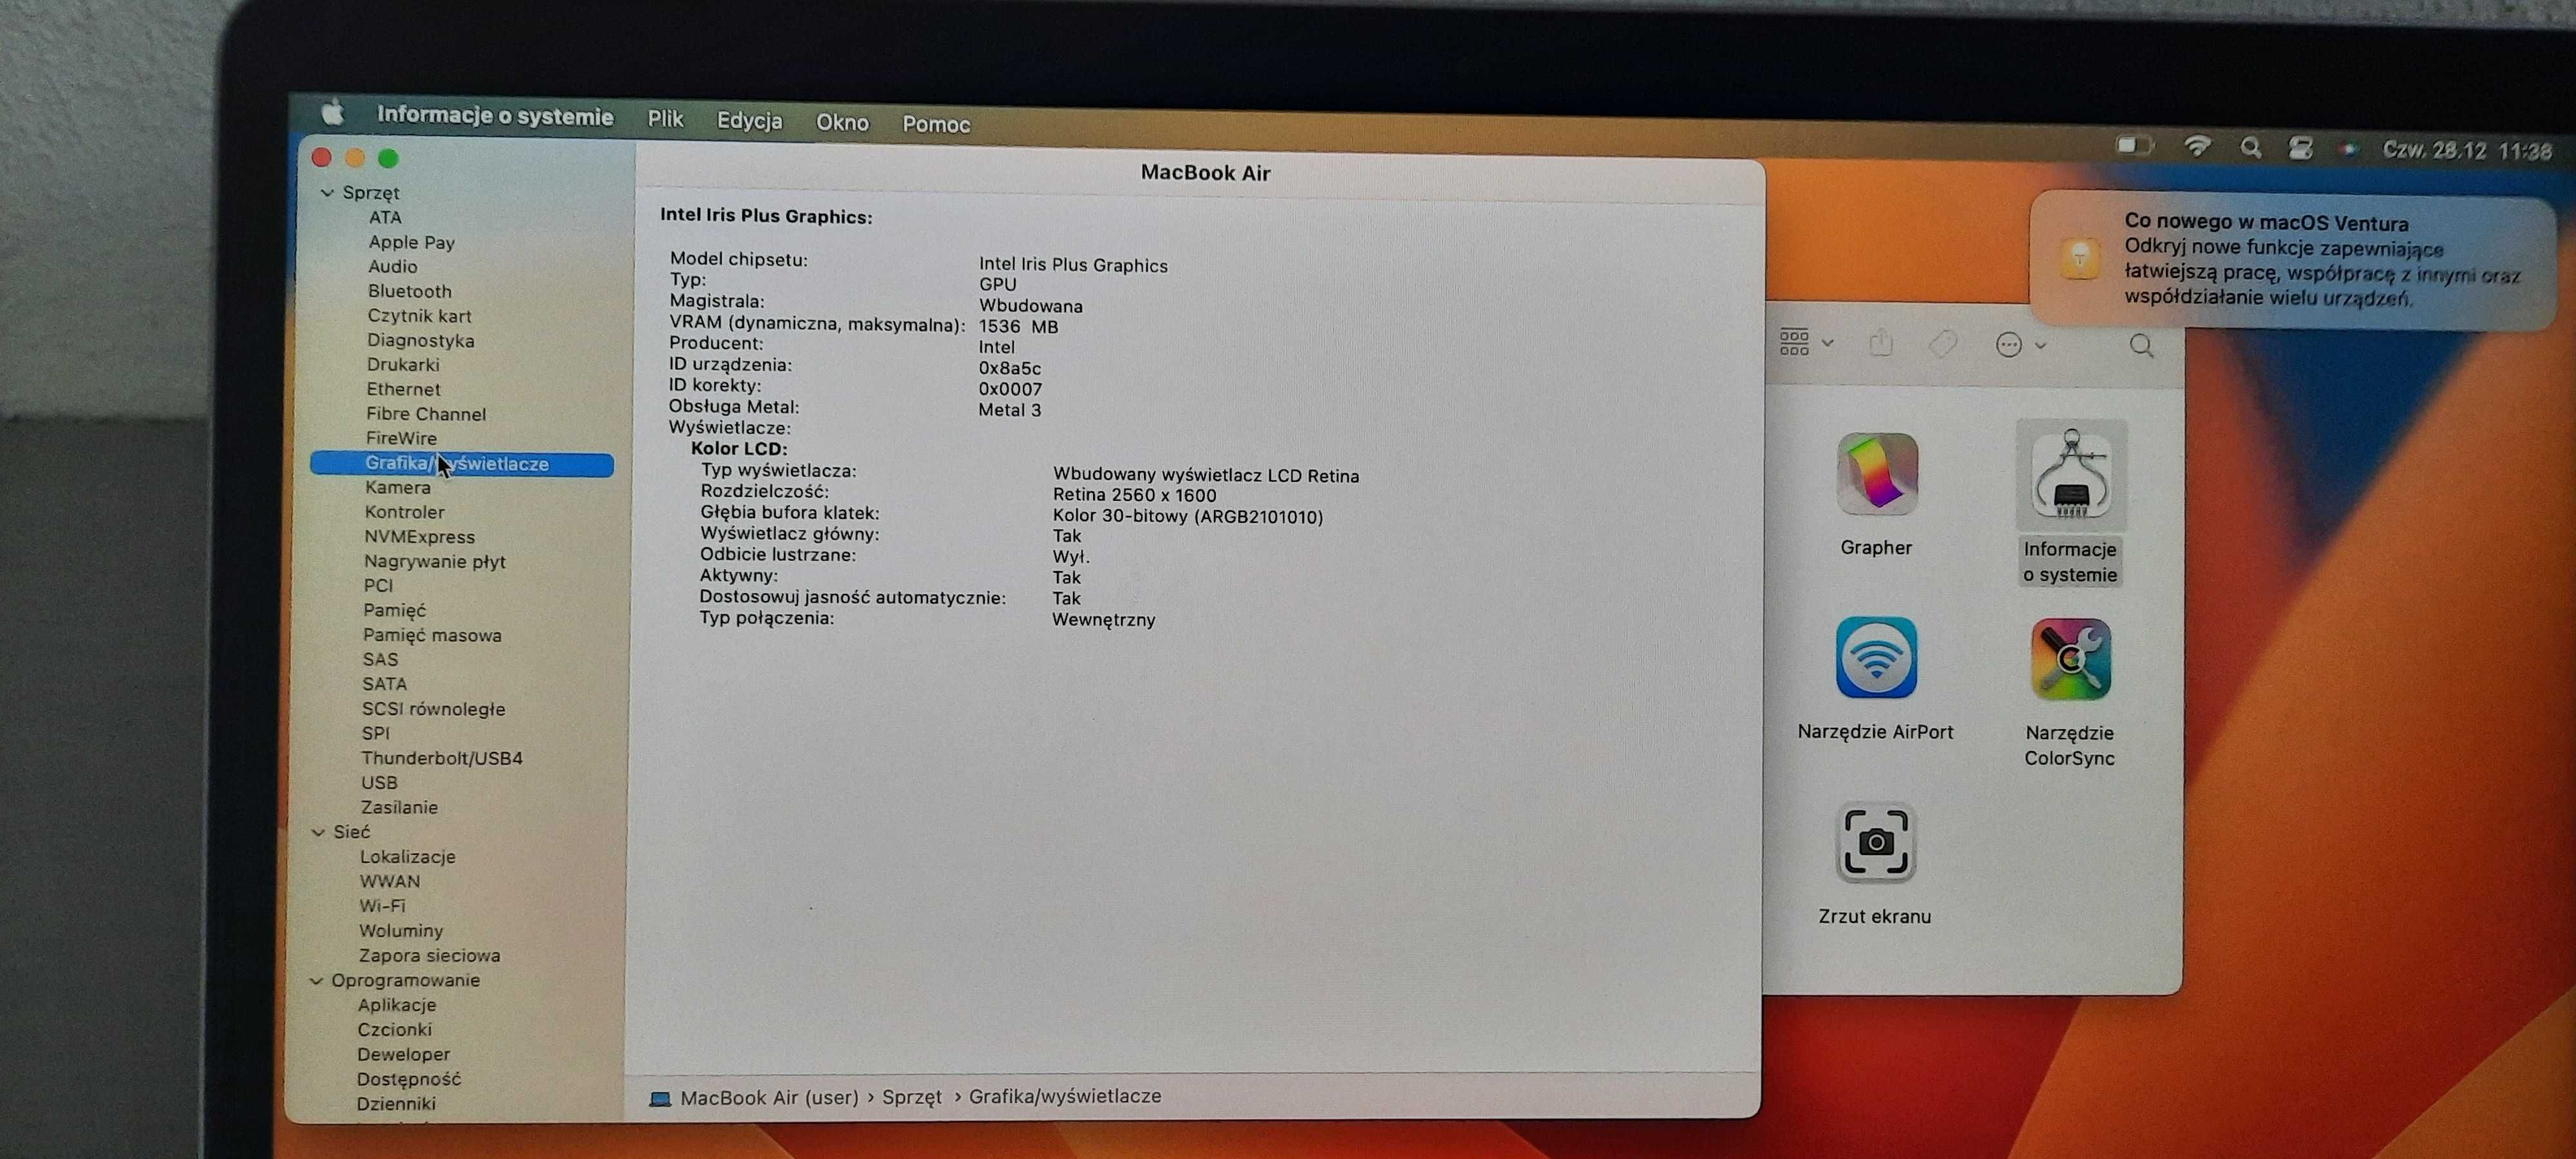 MacBook Air 13" i3 1.1GHz/8GB/256GB SSD/Iris Plus